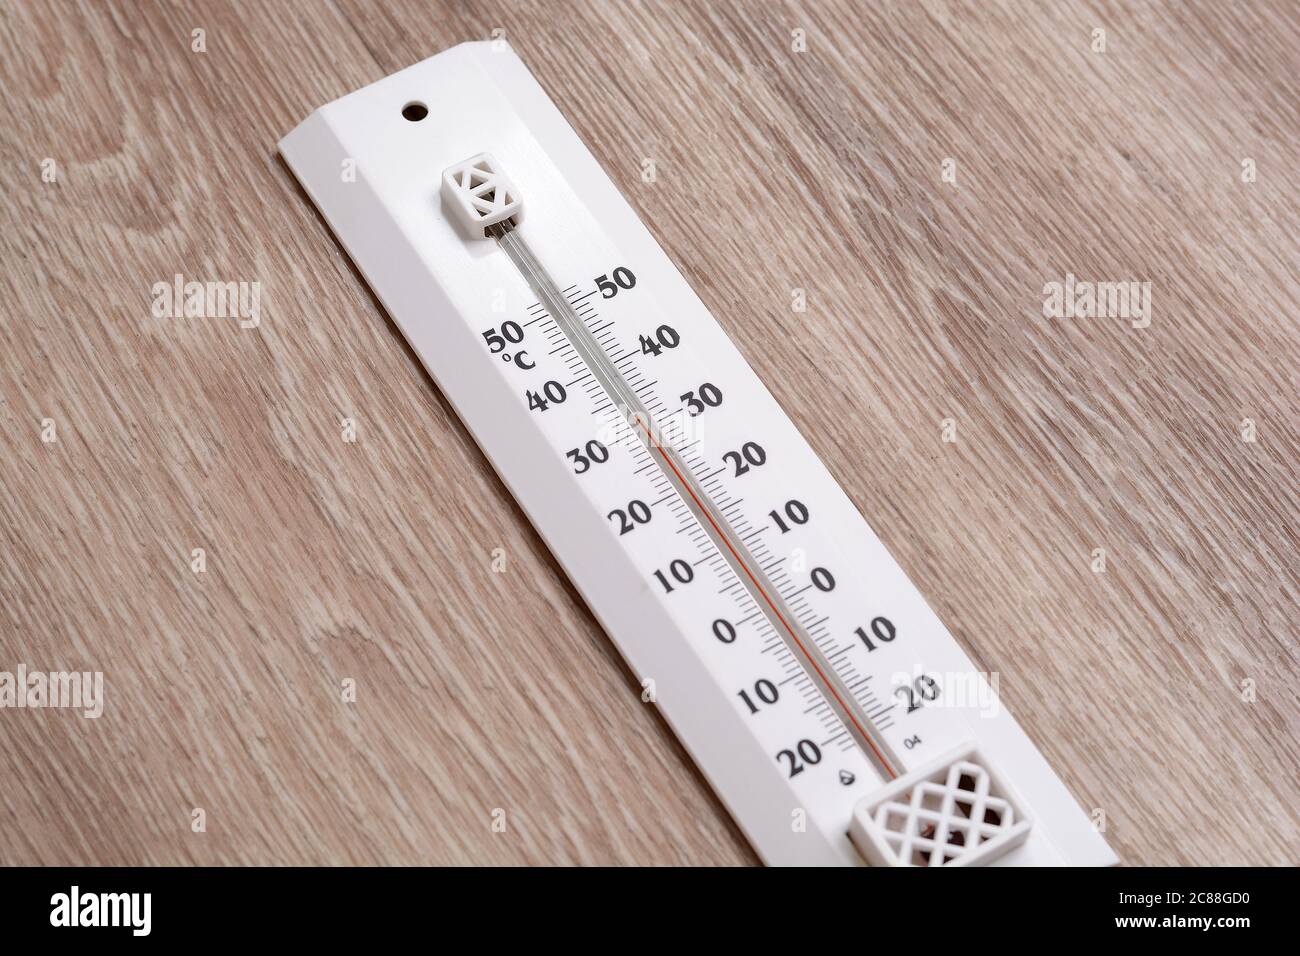 Meteorologie-Thermometer. Kälte- und Wärmetemperatur. Celsius auf Thermometern Stockfoto